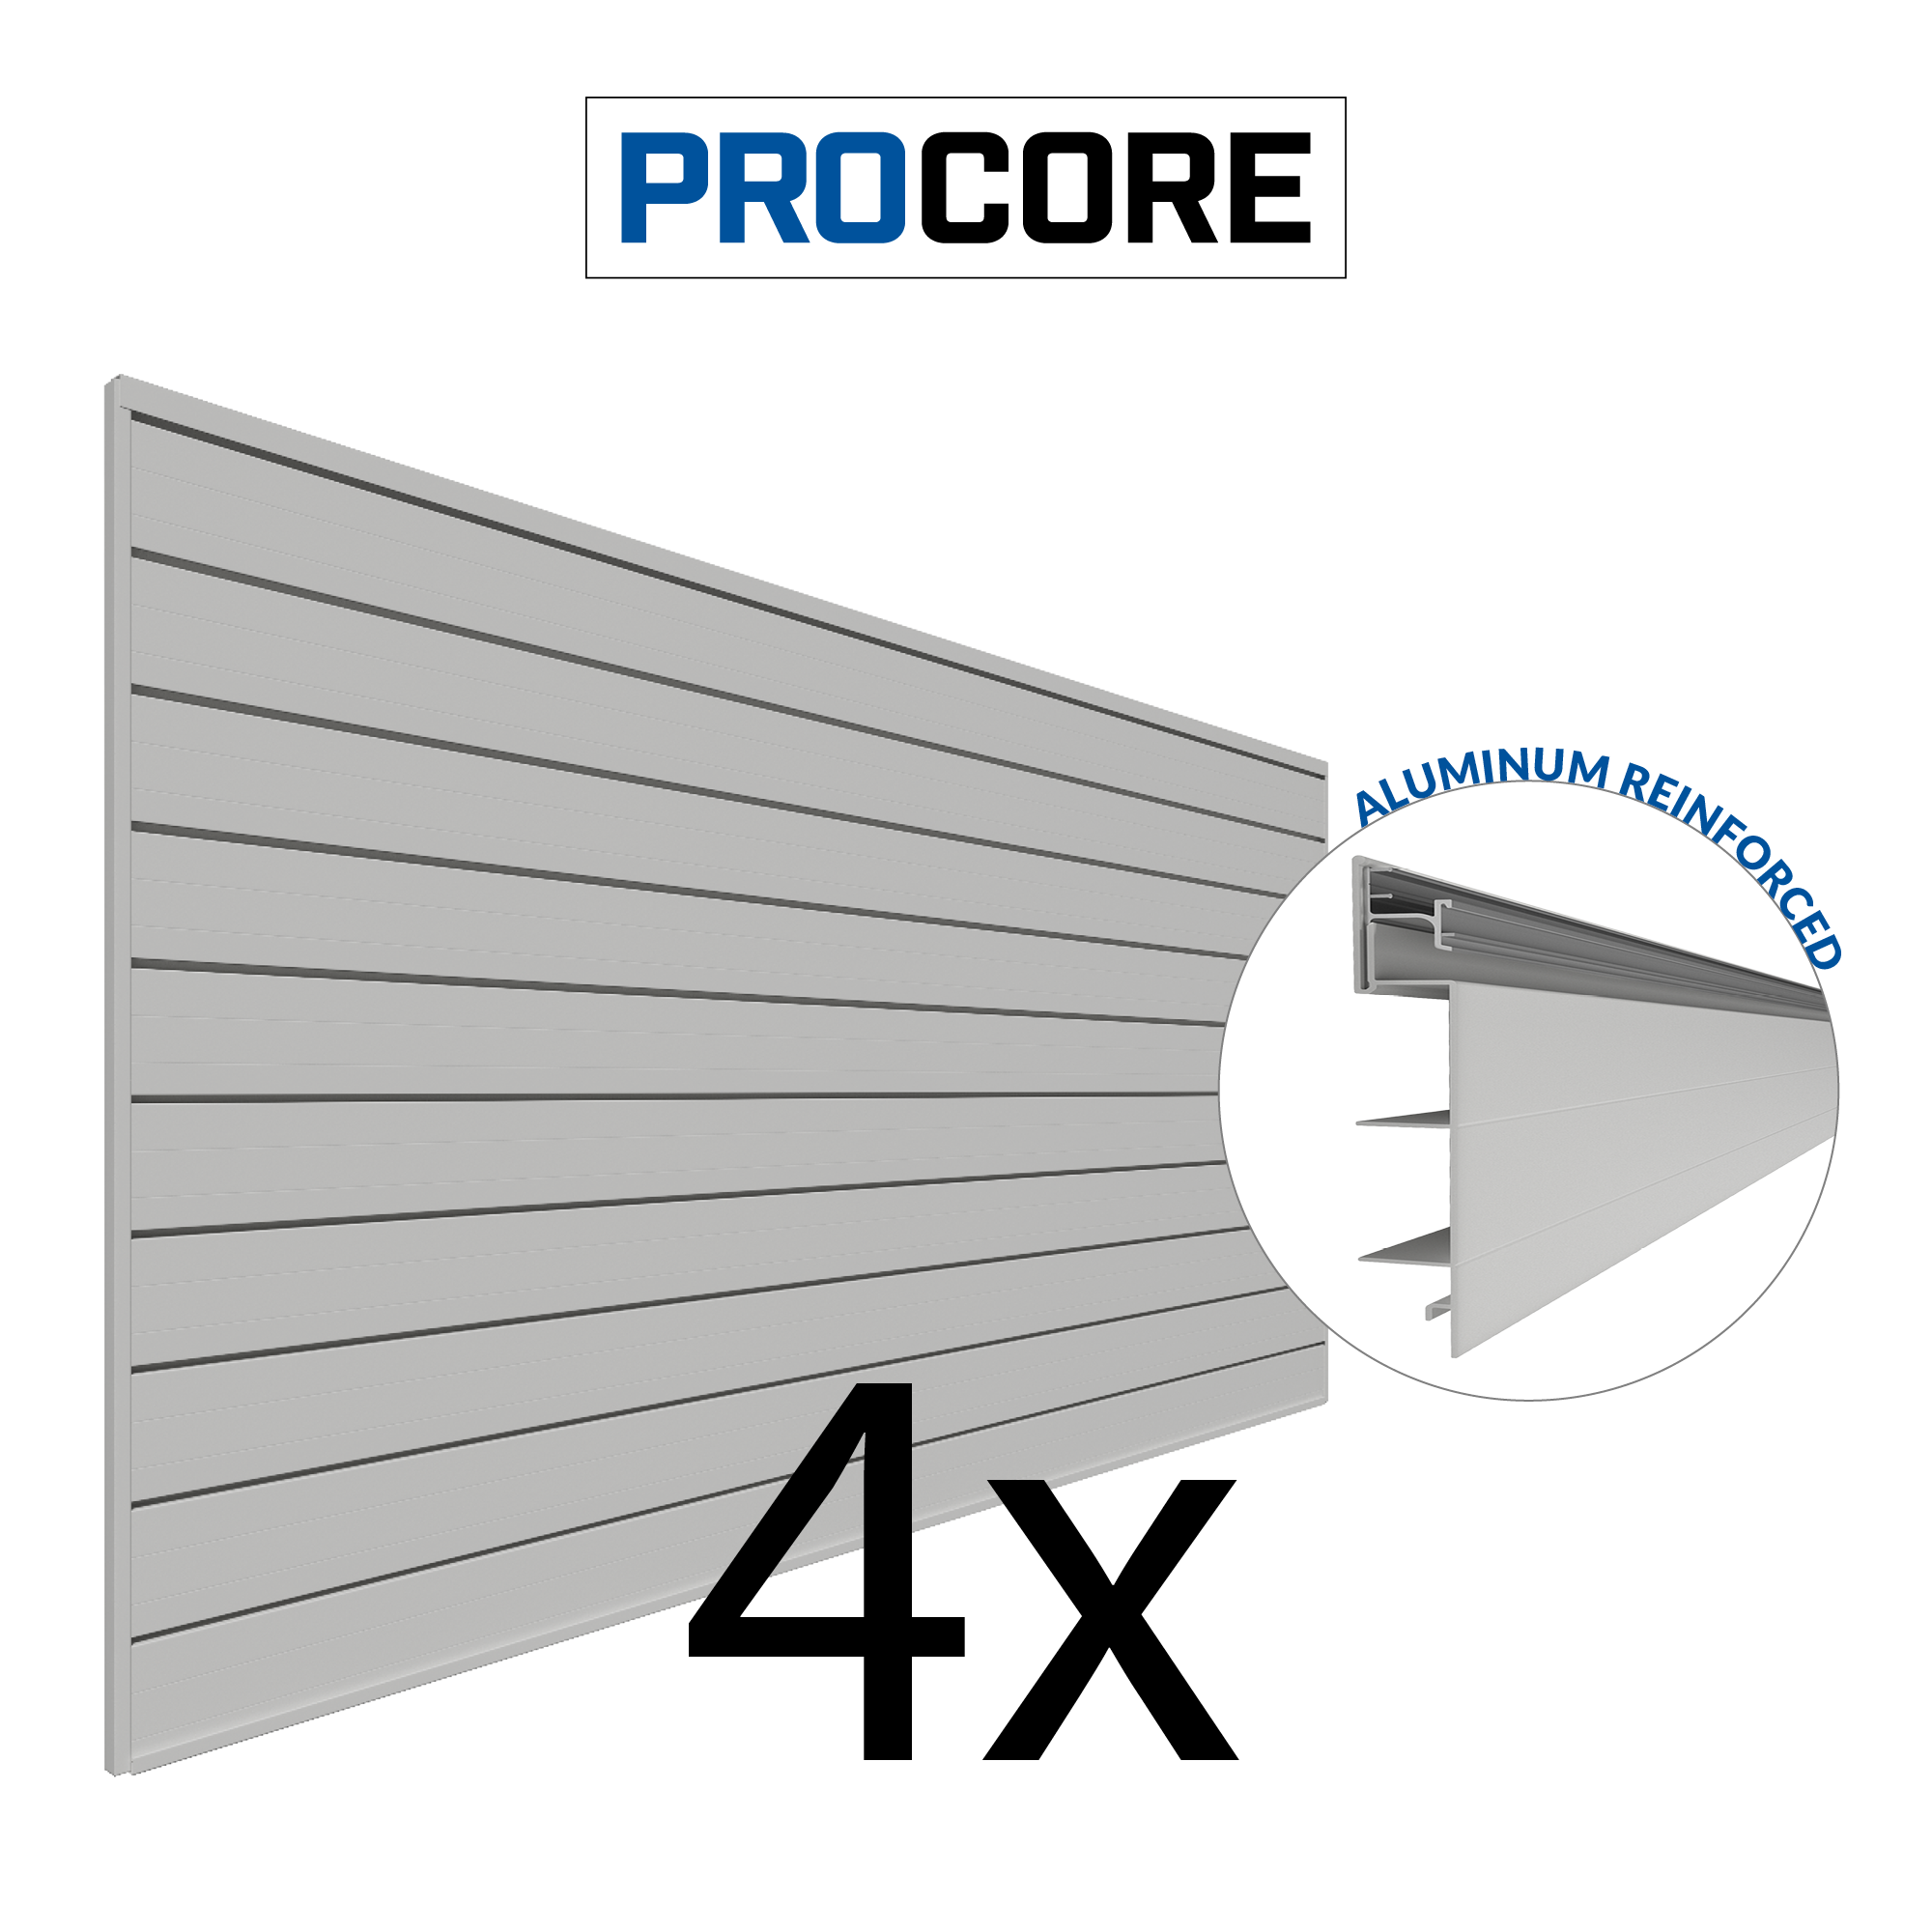 4 x 8ft. PROCORE PVC Slatwall Gray – 4 Pack 128 sq ft